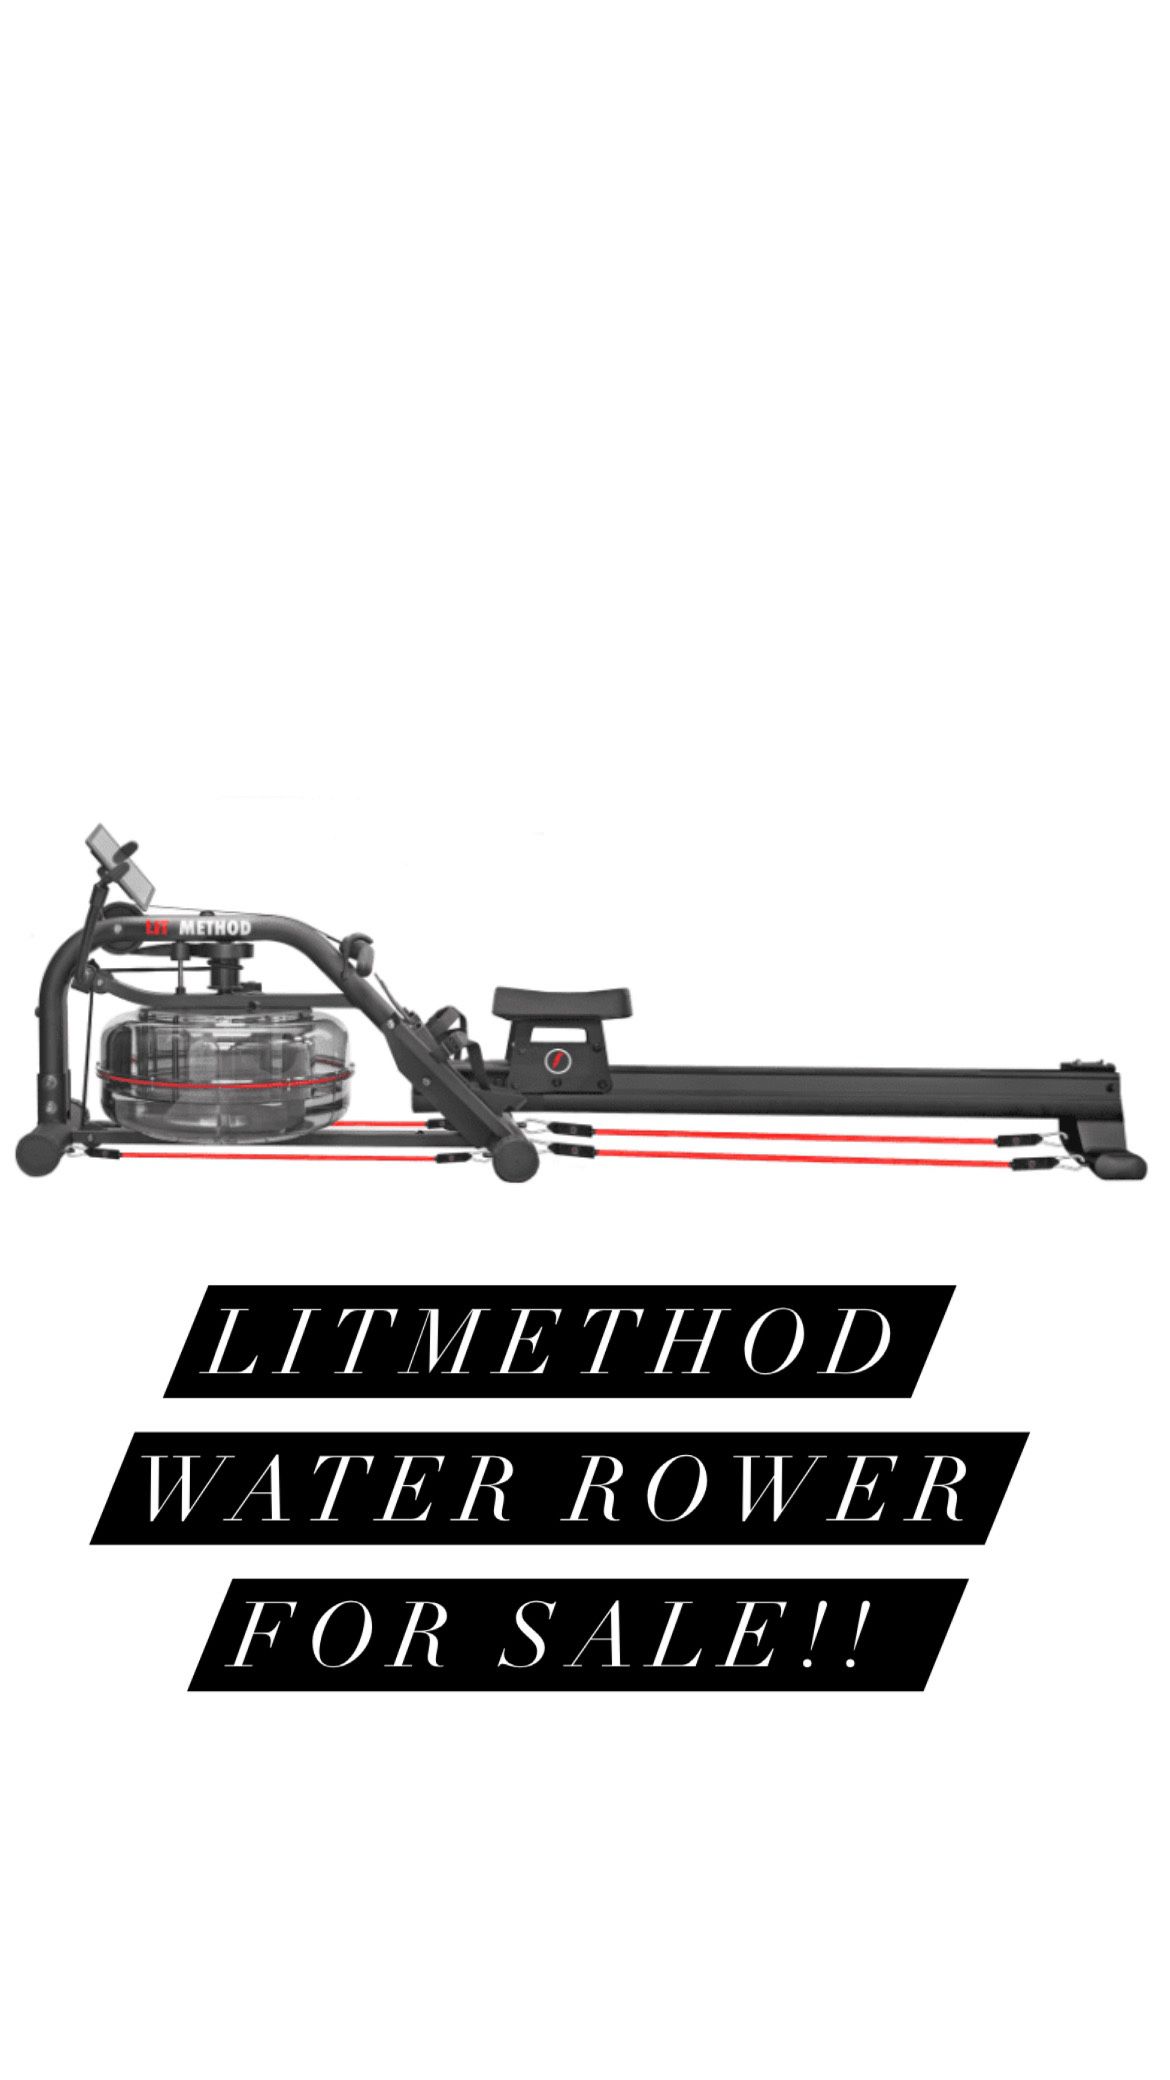 Litmethod Water Rower